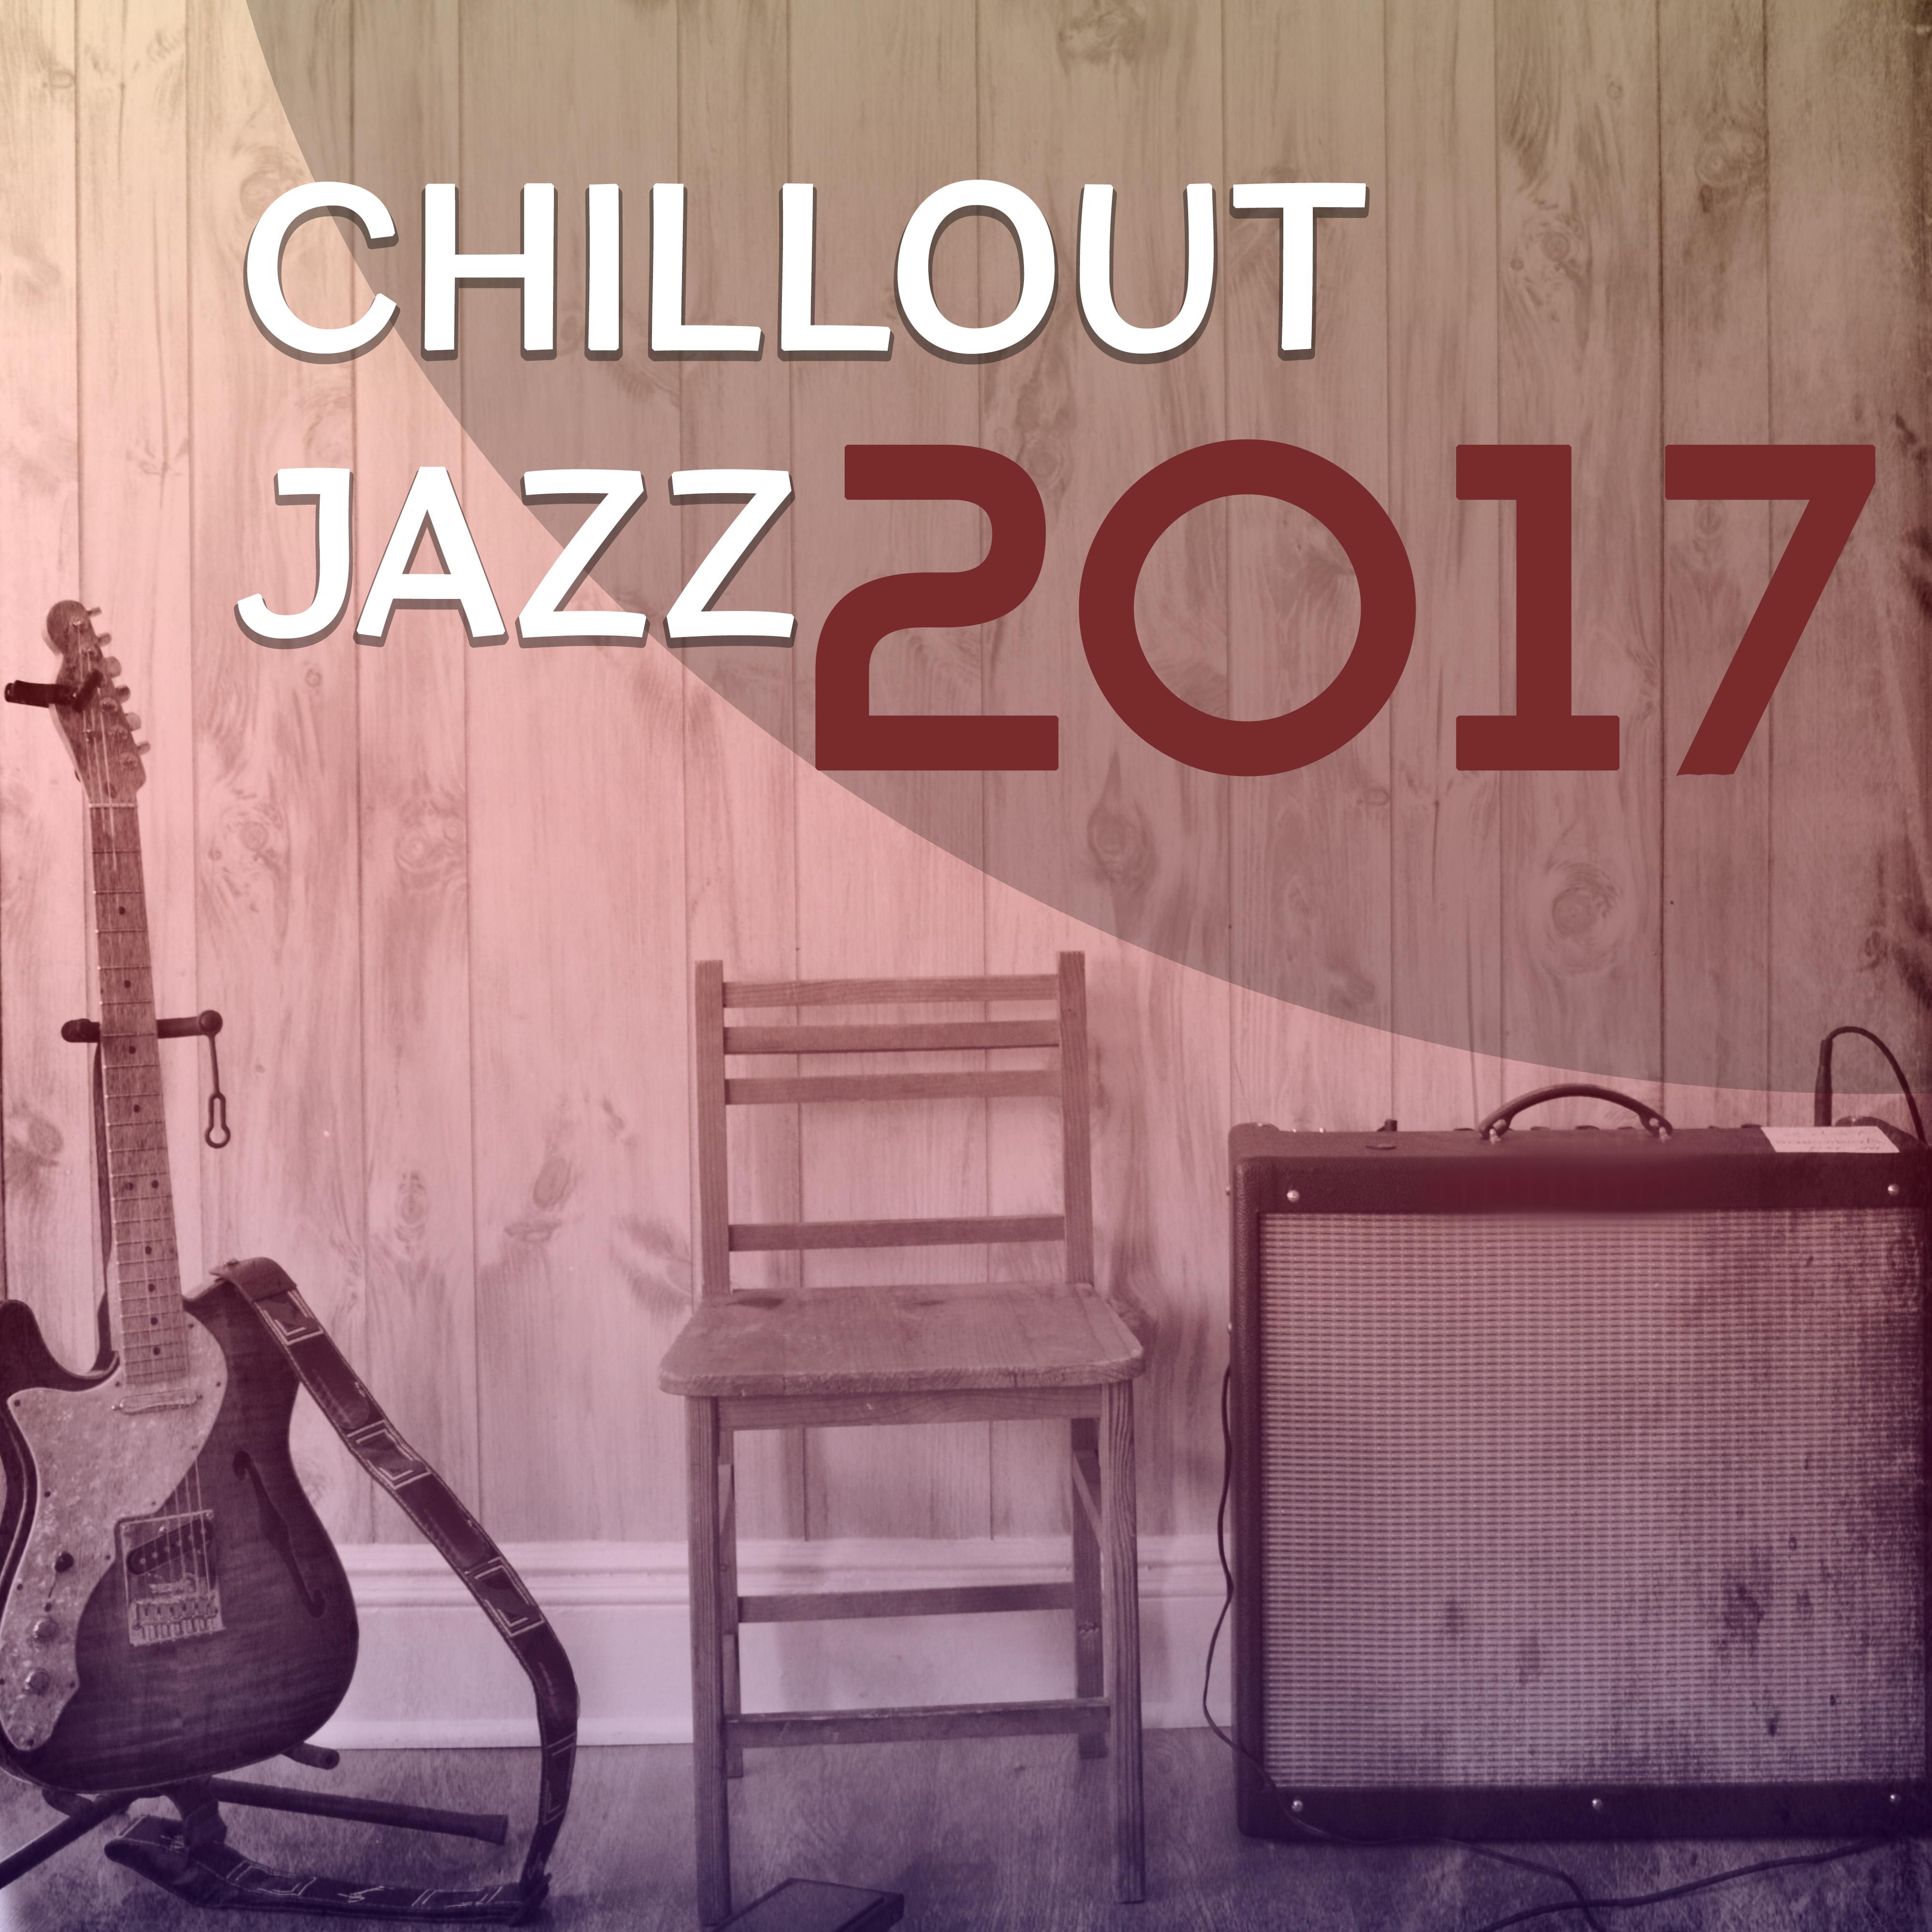 Chillout Jazz 2017 – Best Jazz Album of 2017, Instrumental Jazz Session, Music for Jazz Club, Restaurant, Lounge, Relax